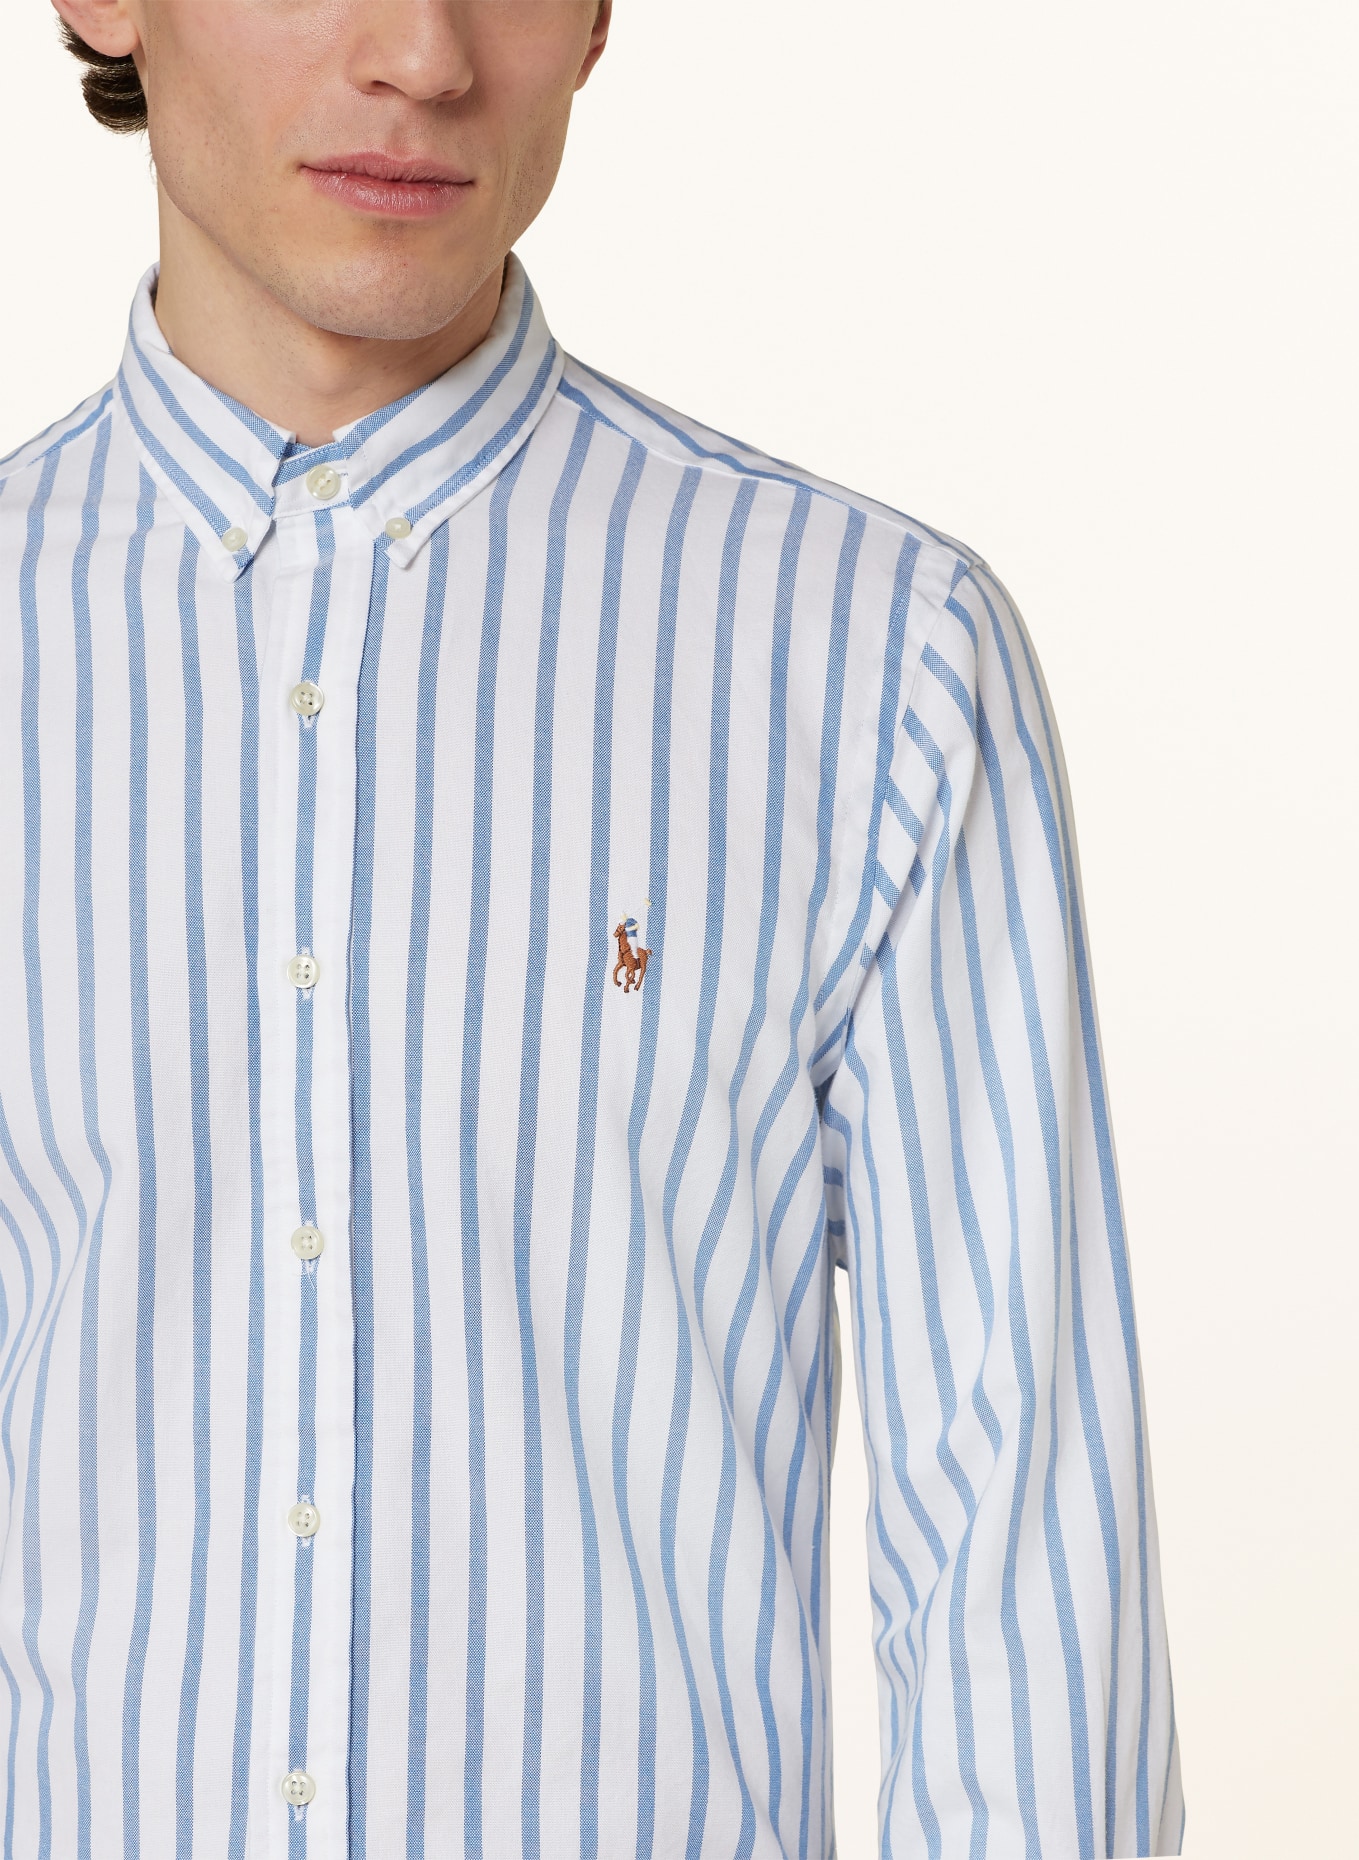 Oxford shirt with button-down collar, Polo Ralph Lauren, light